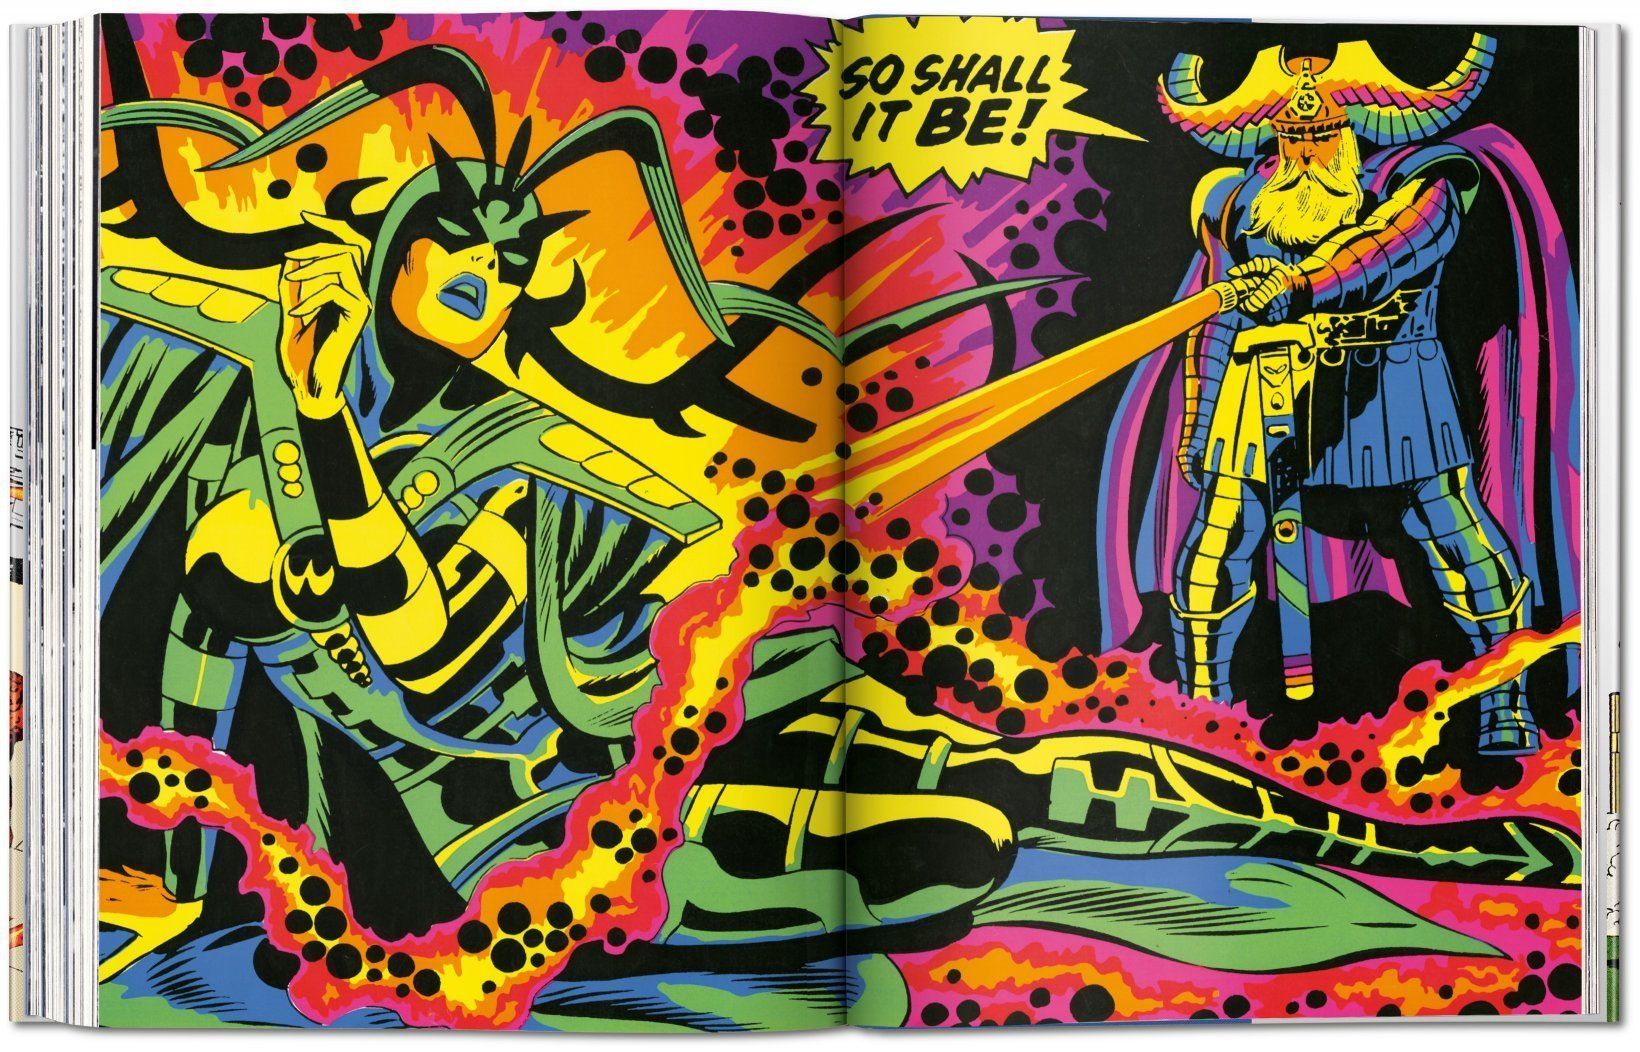 he Marvel Age of Comics 1961-1978